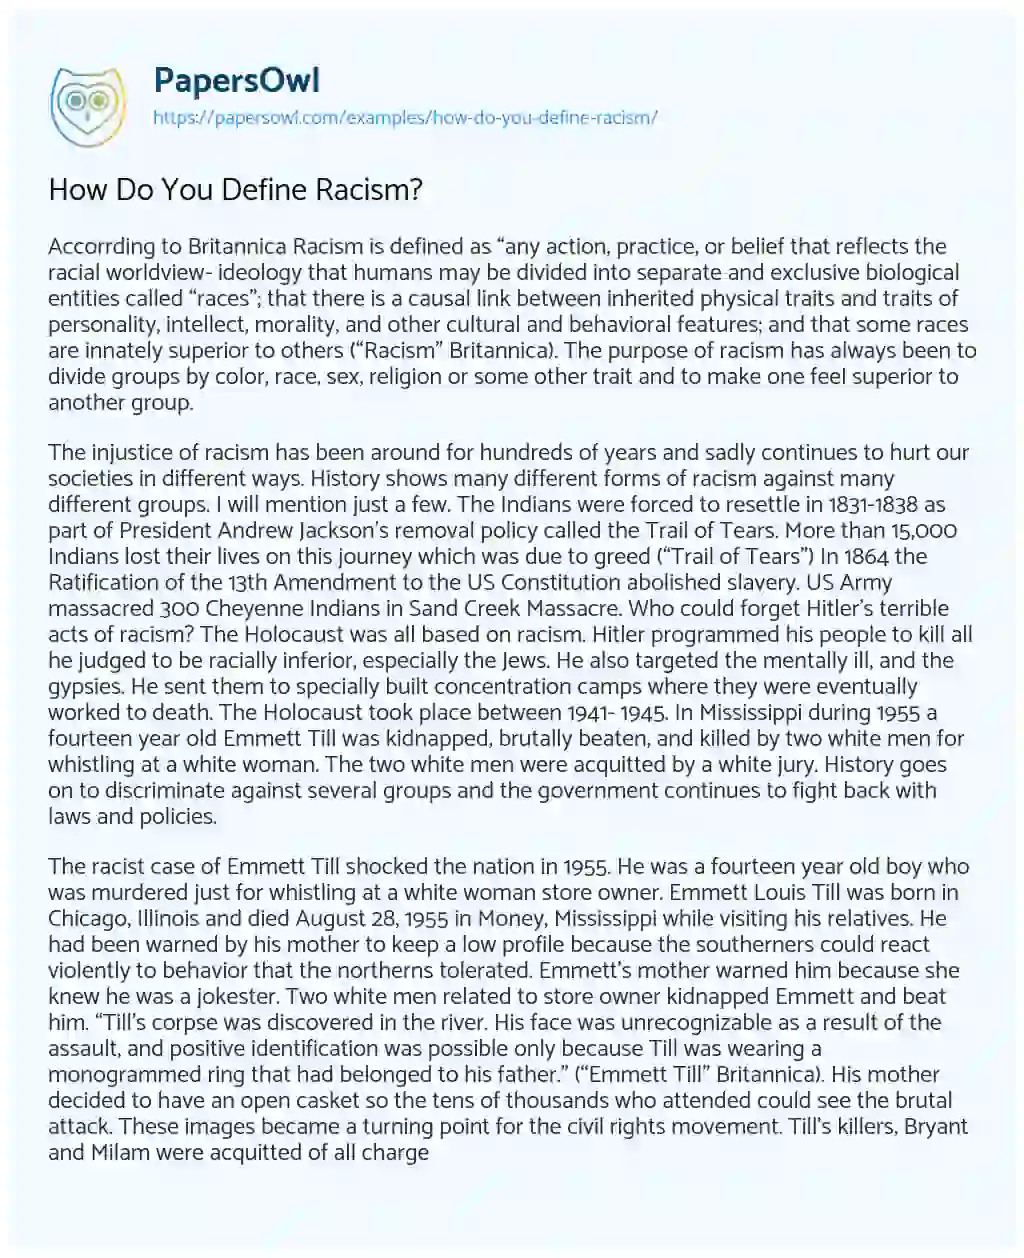 Essay on How do you Define Racism?